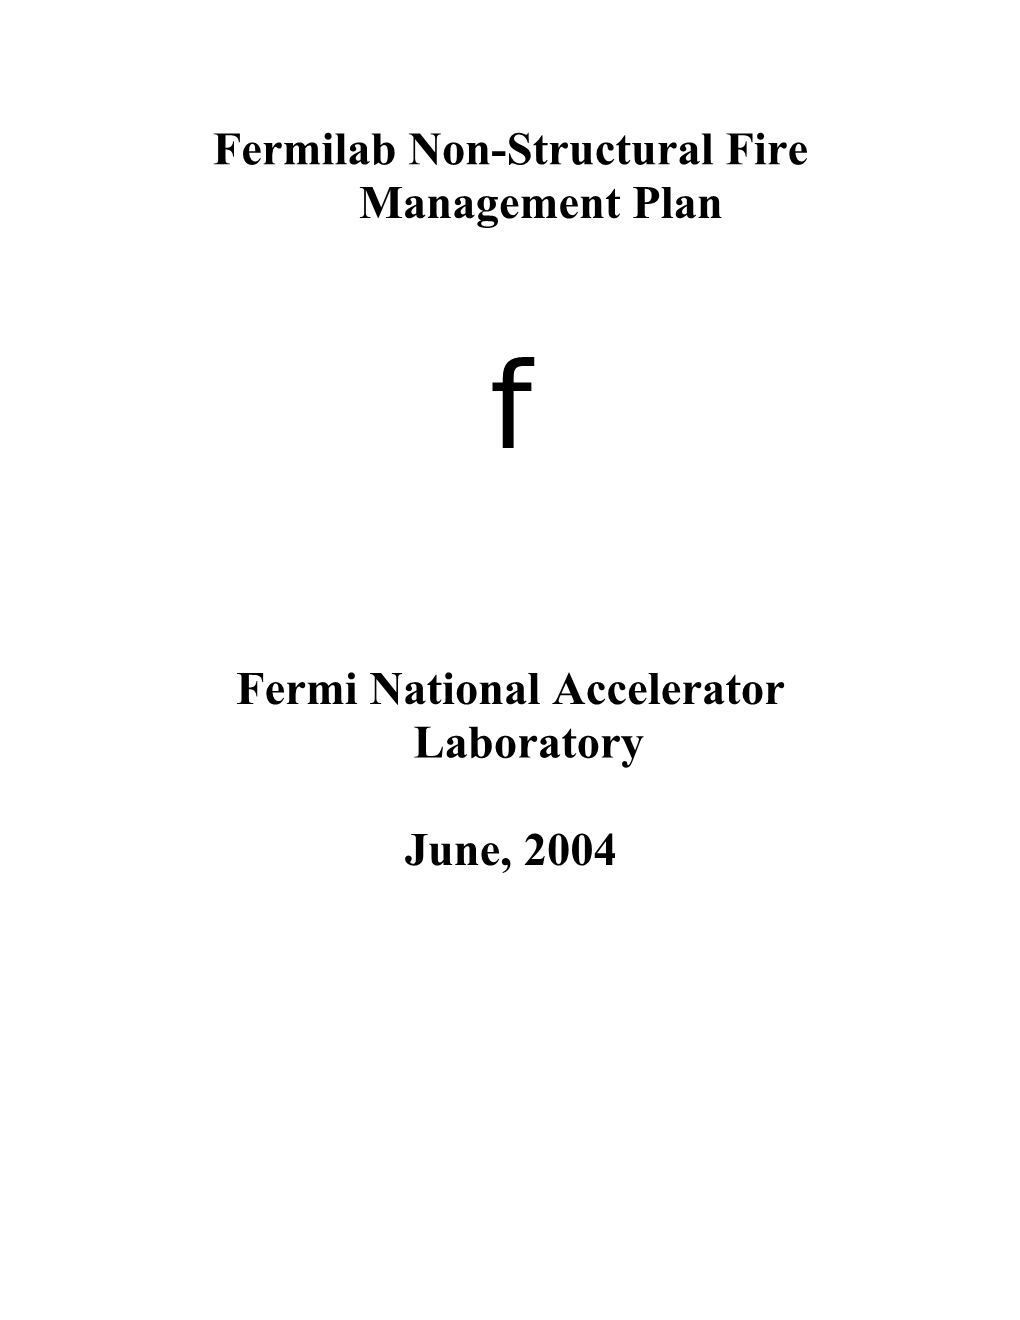 Fermilab Non-Structural Fire Management Plan